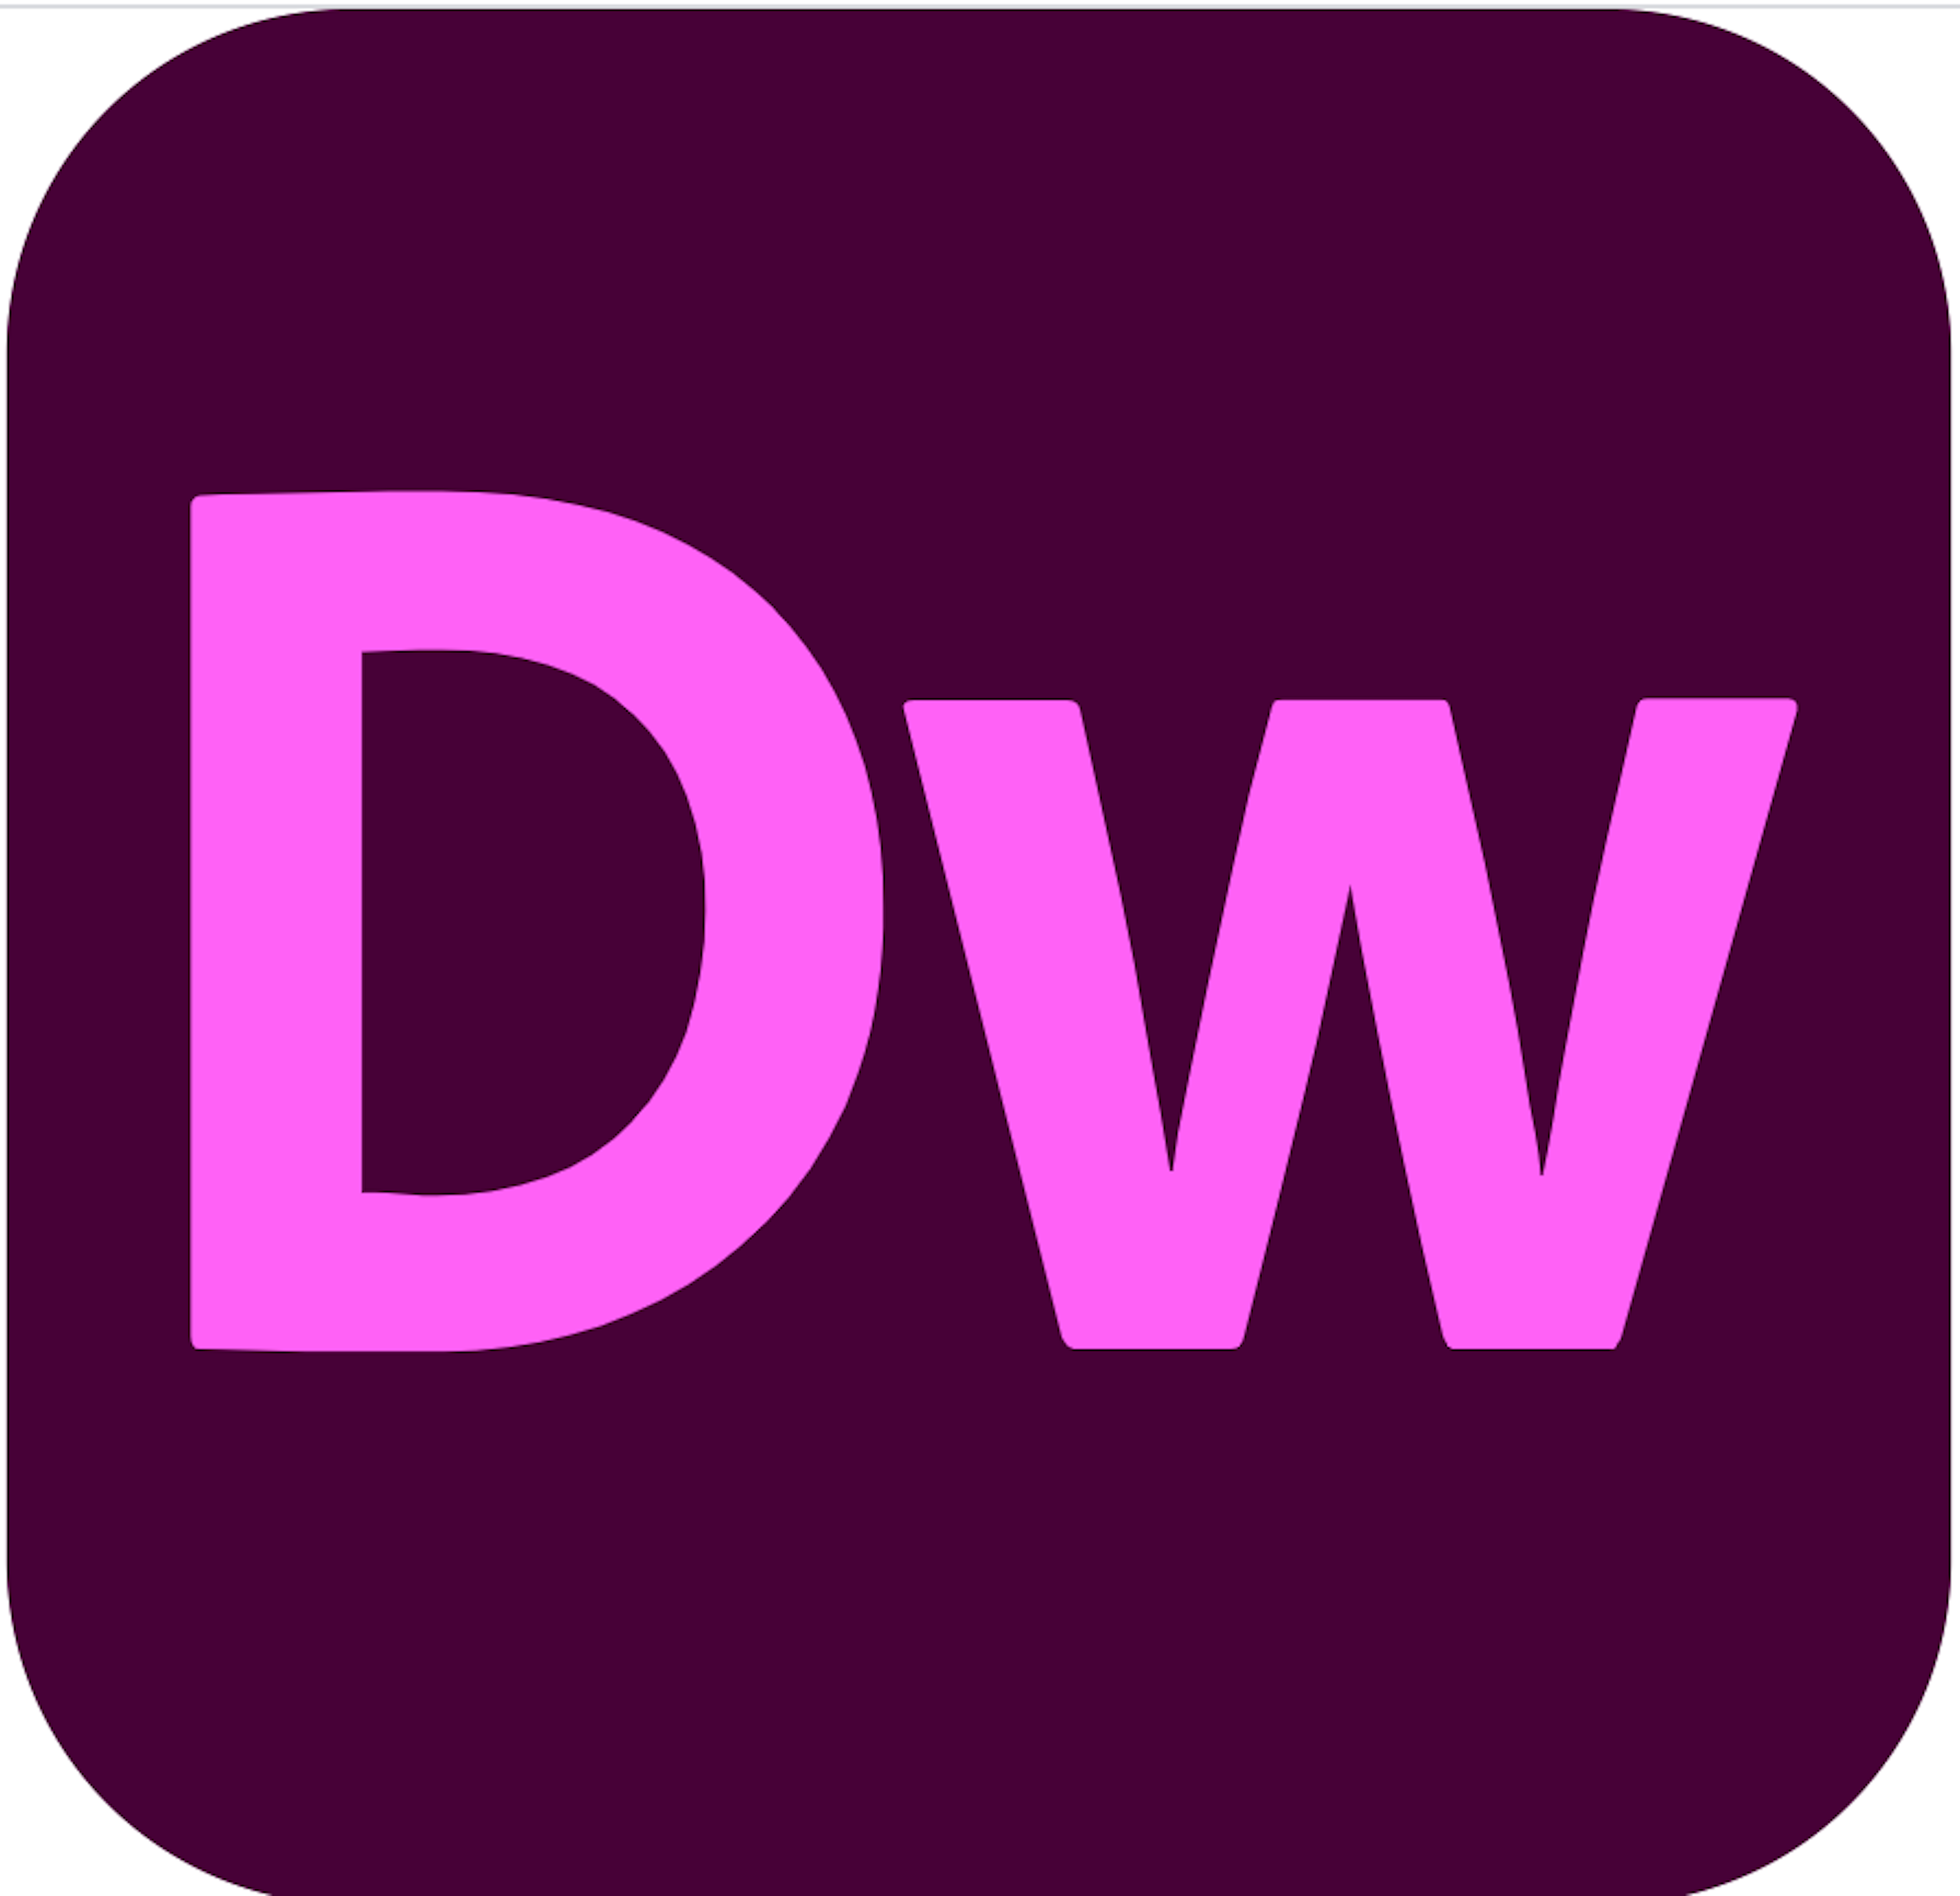 Adobe Dreamweaver Pricing, Features, Reviews & Alternatives GetApp